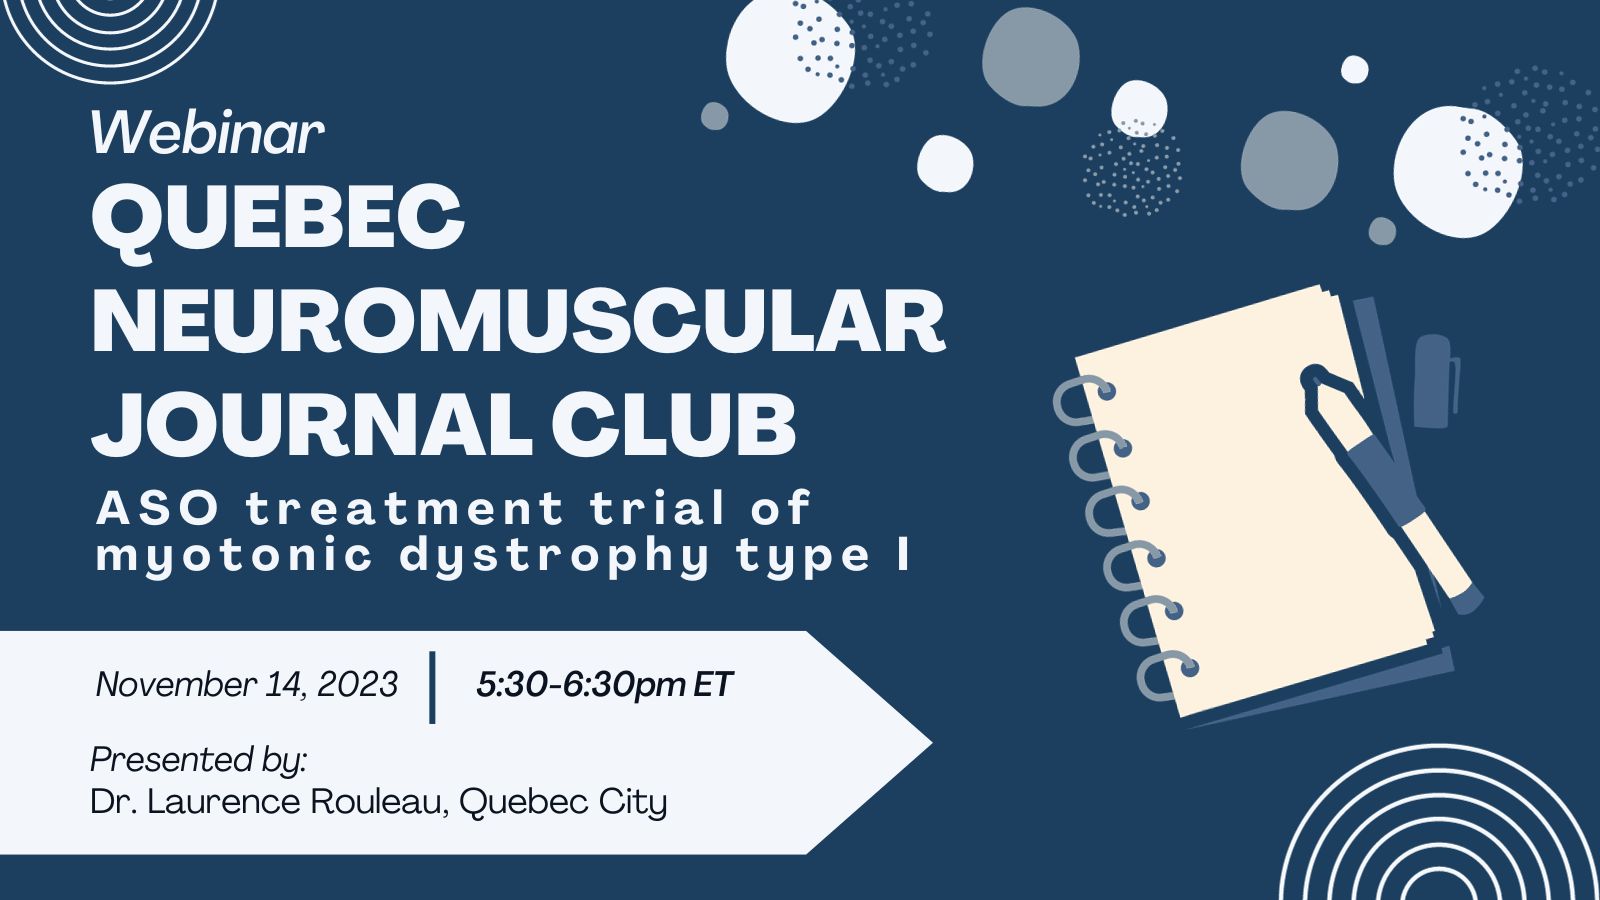 Quebec Neuromuscular Journal Club poster for November 14th webinar.